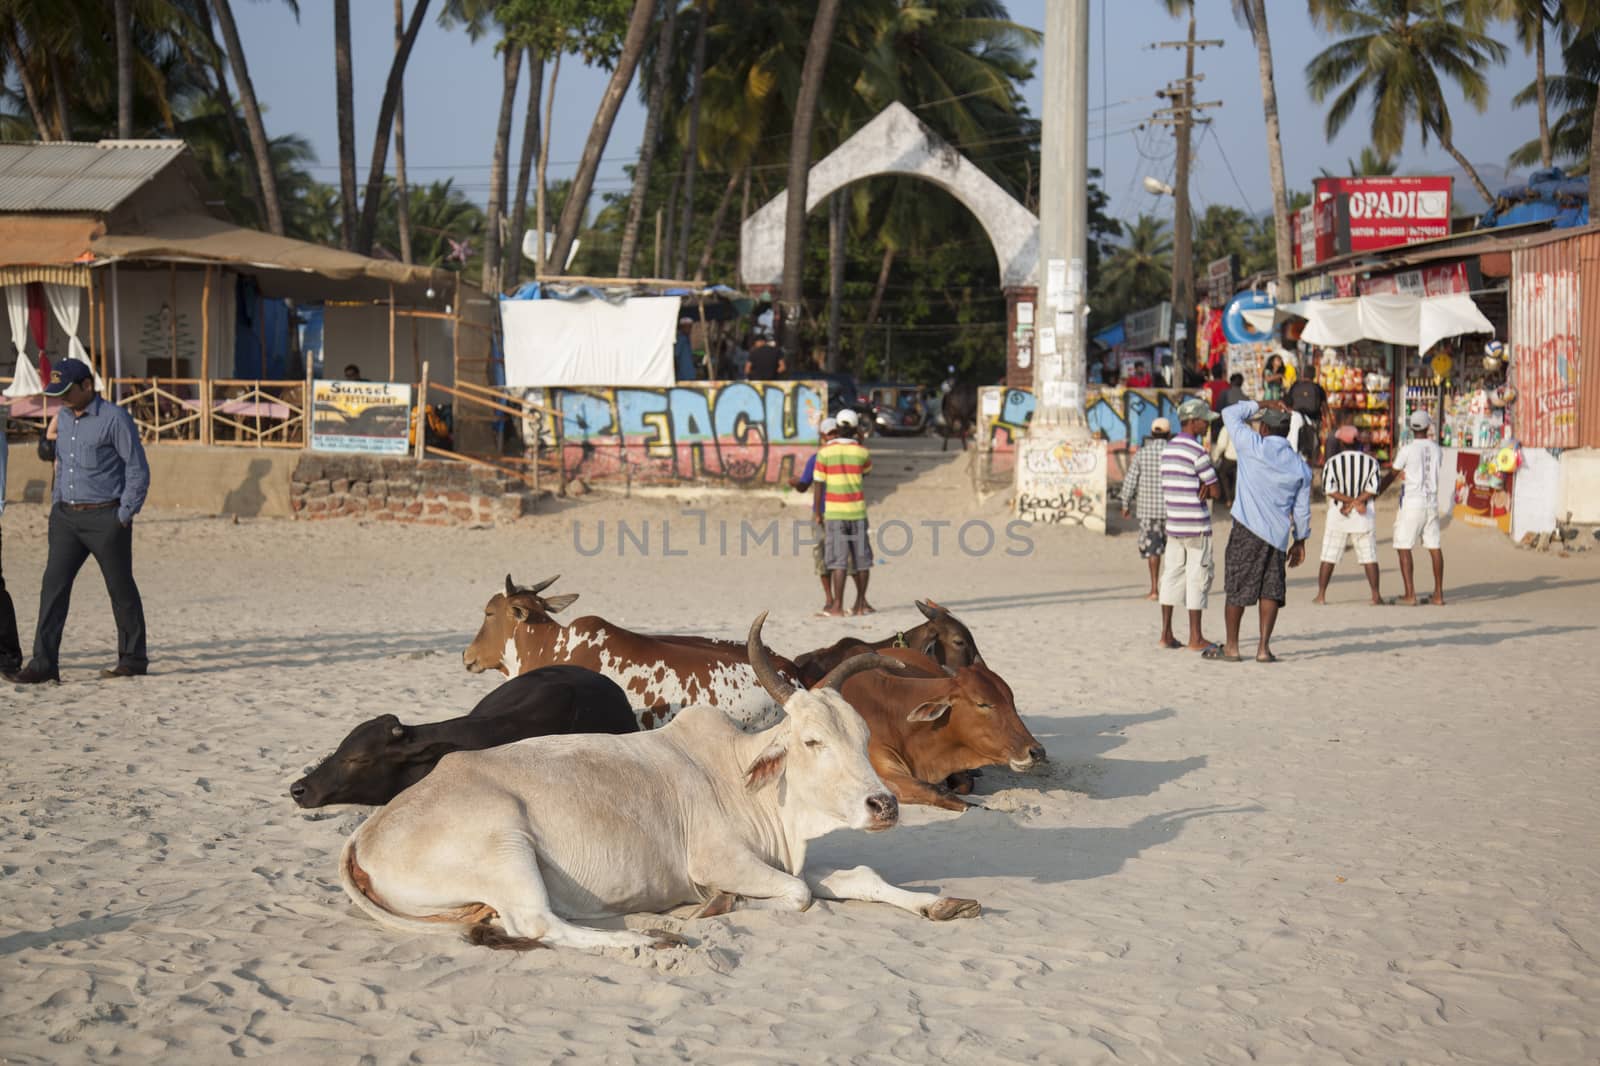 Cow on the beach in Goa, India